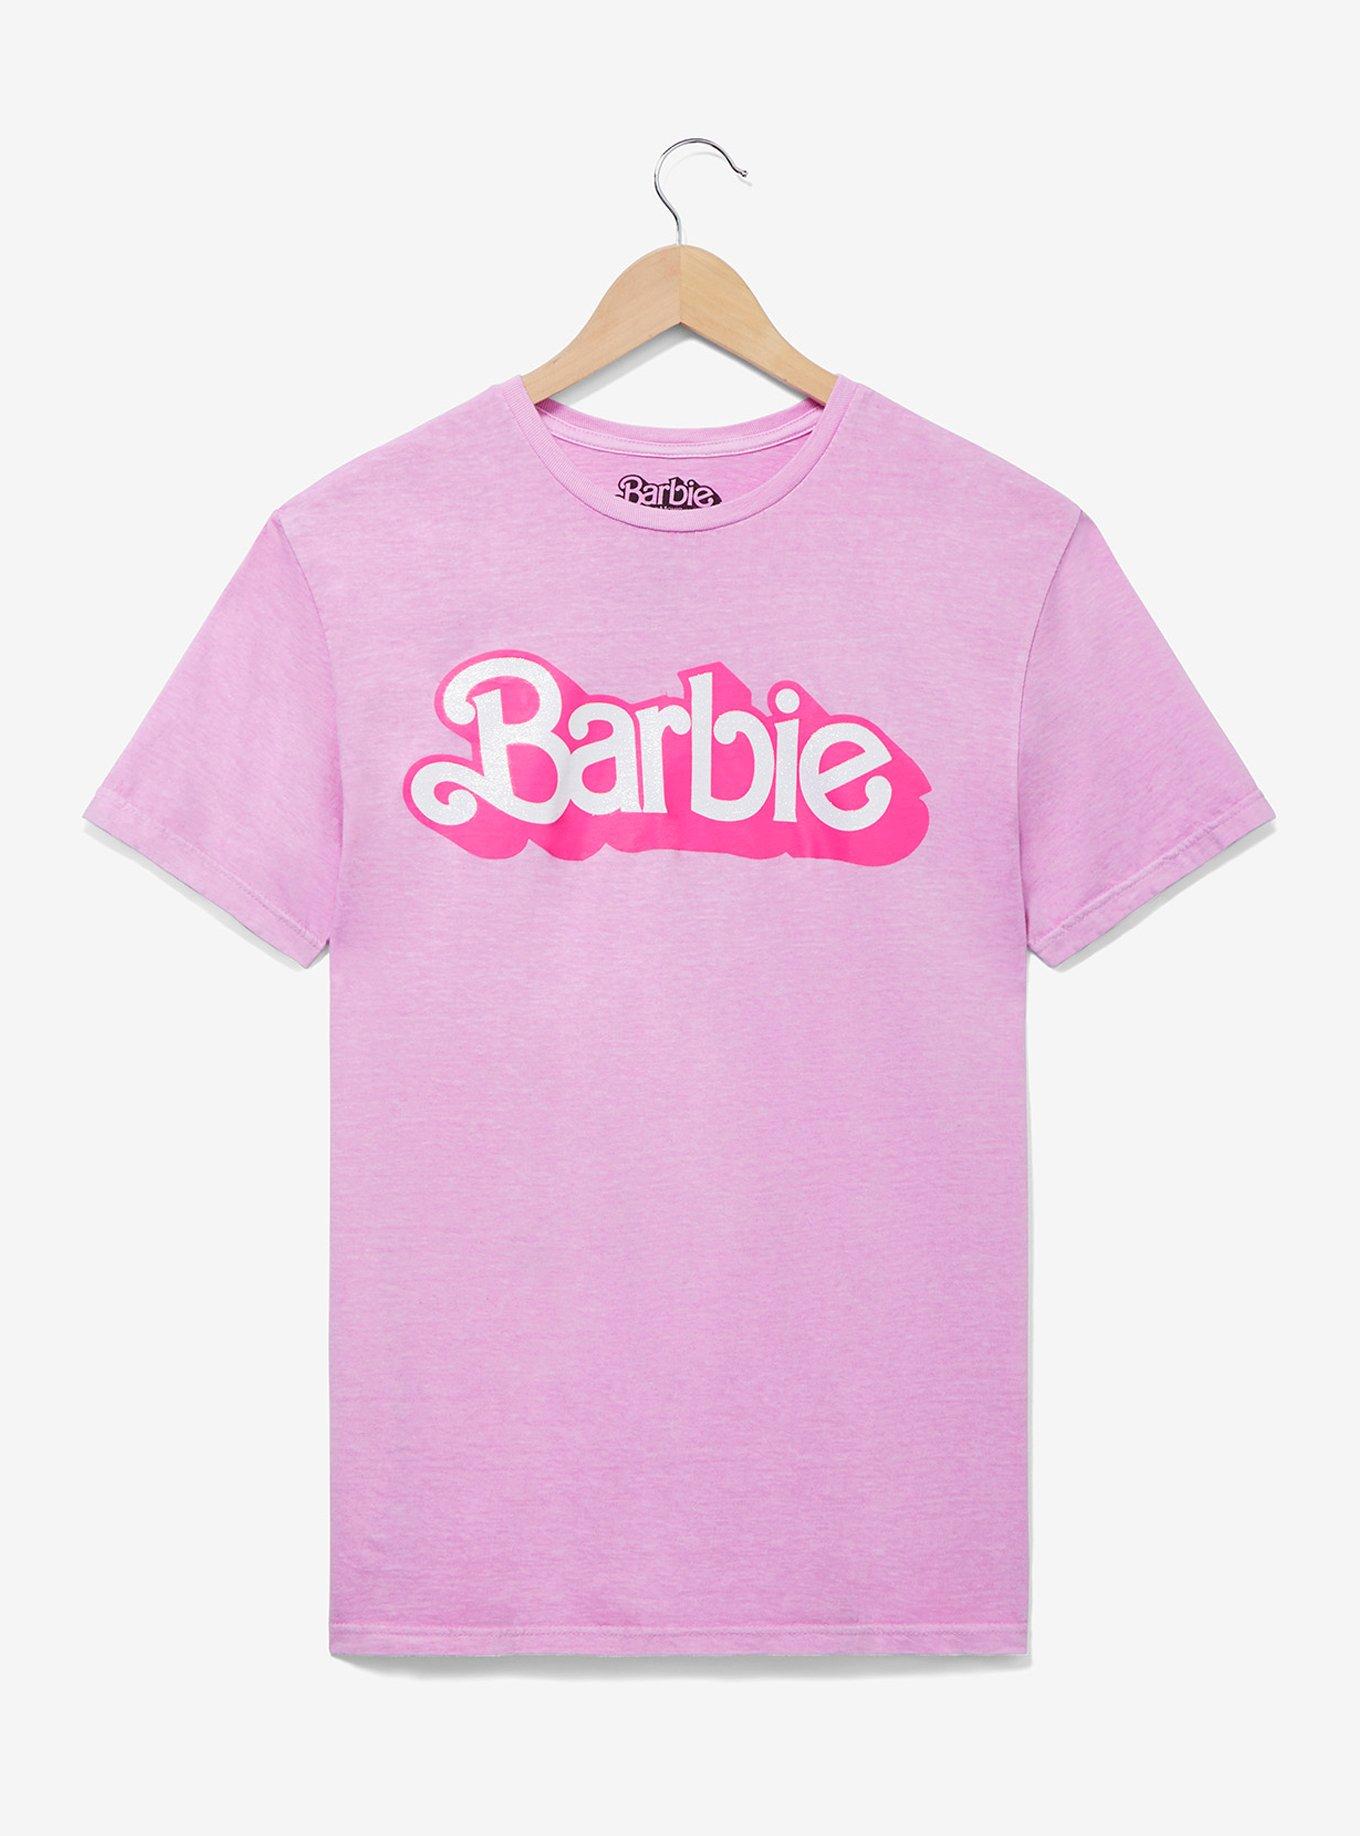 Barbie The Movie Barbie Logo Women’s T-Shirt - BoxLunch Exclusive, , hi-res